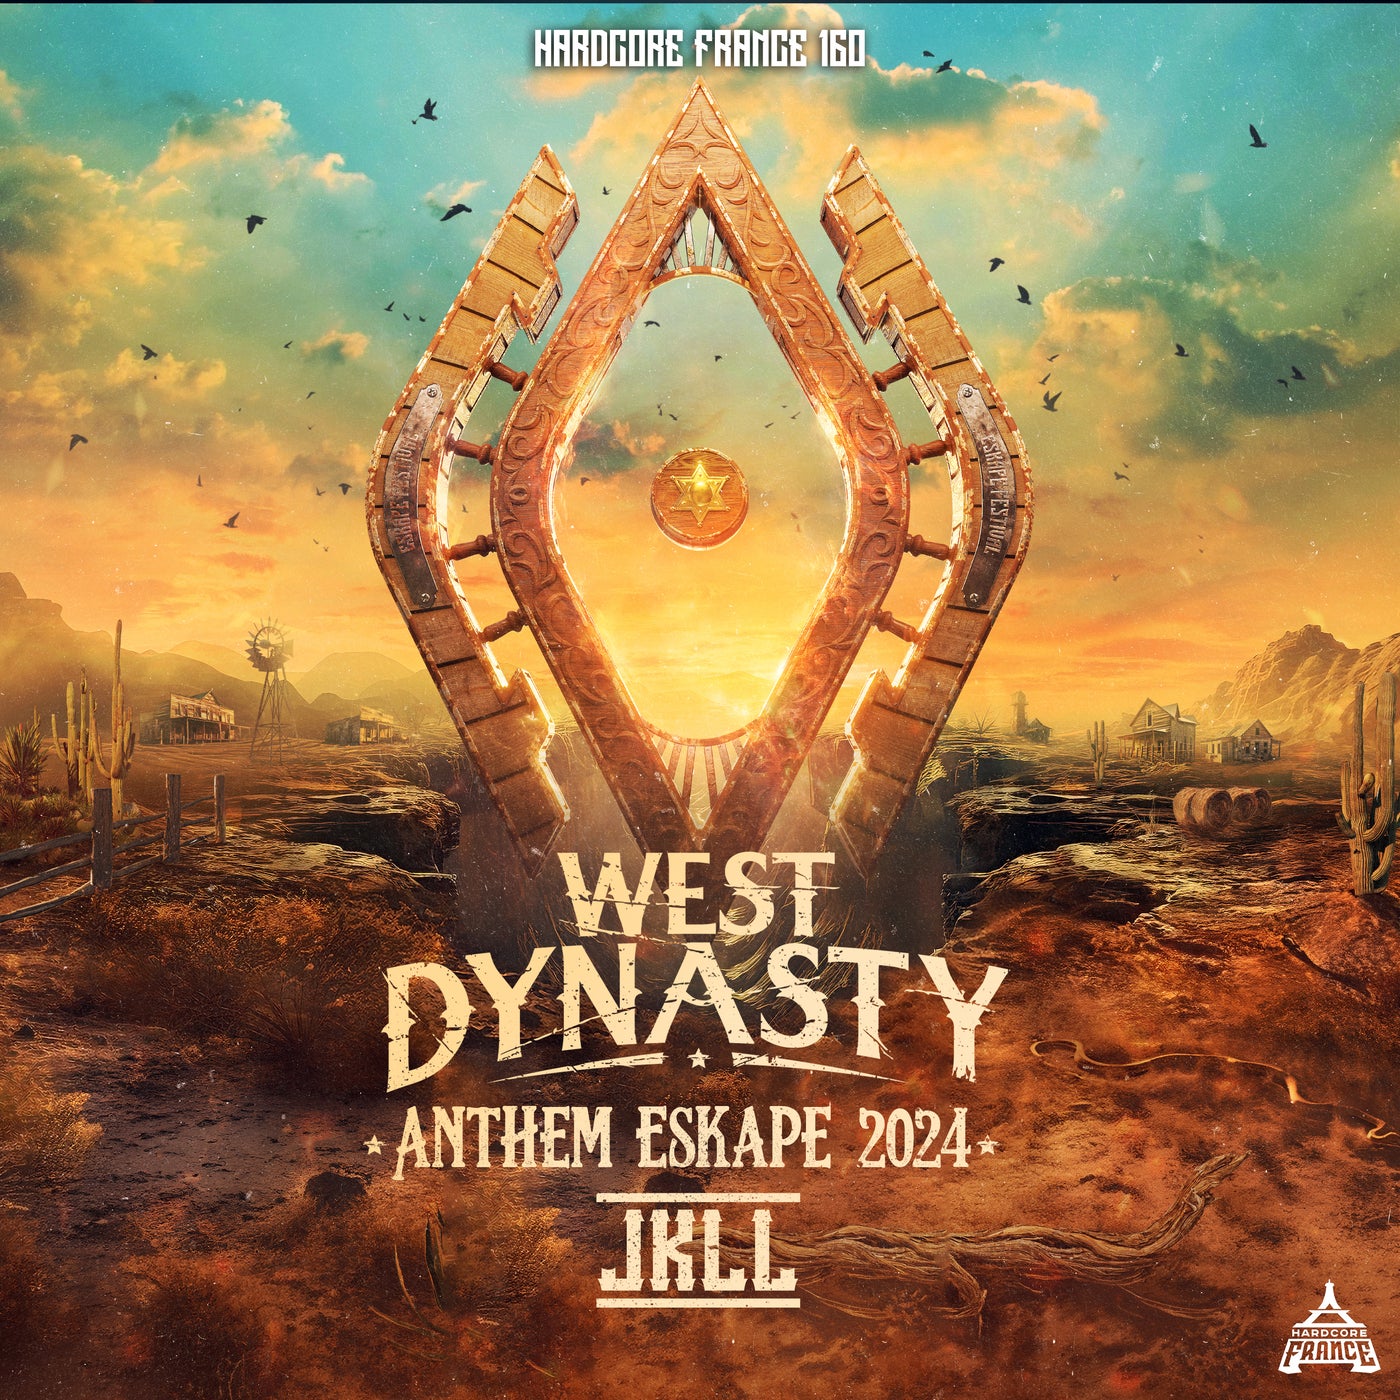 West Dynasty - Anthem Eskape 2024 Extended